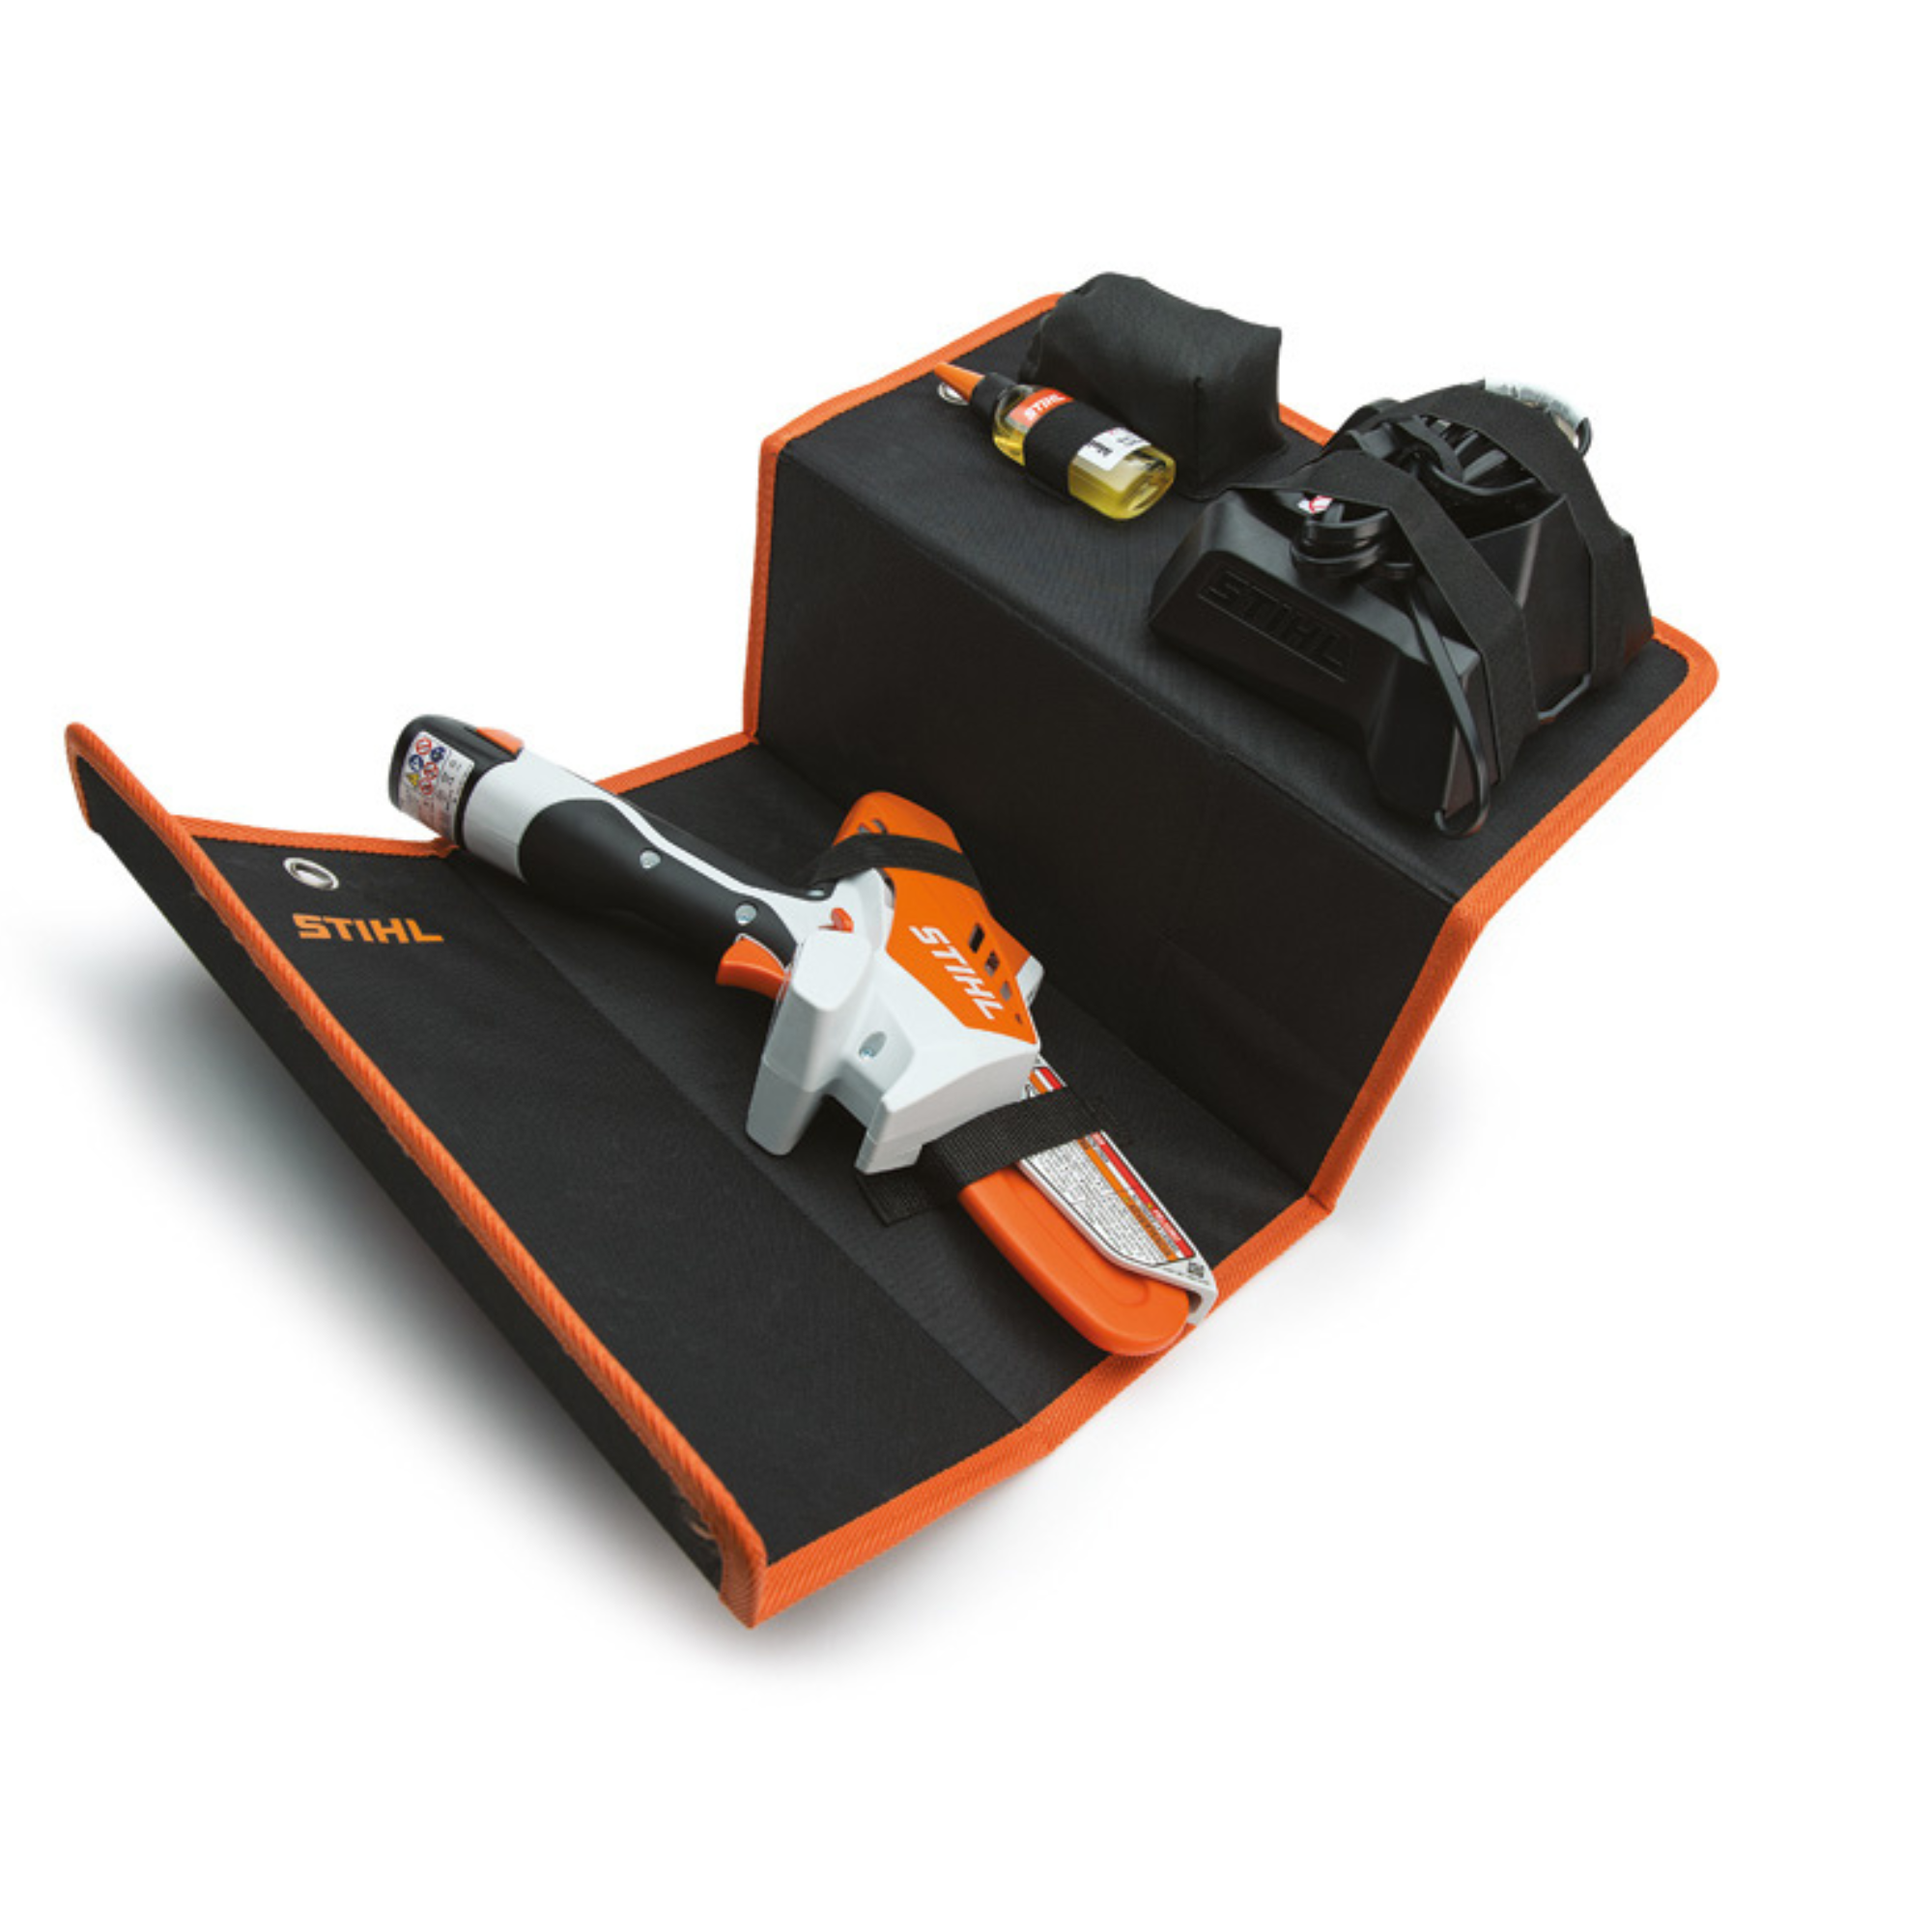 Stihl GTA 26 Orange & White 10.8-Volt Battery-Powered Garden Pruner 0051